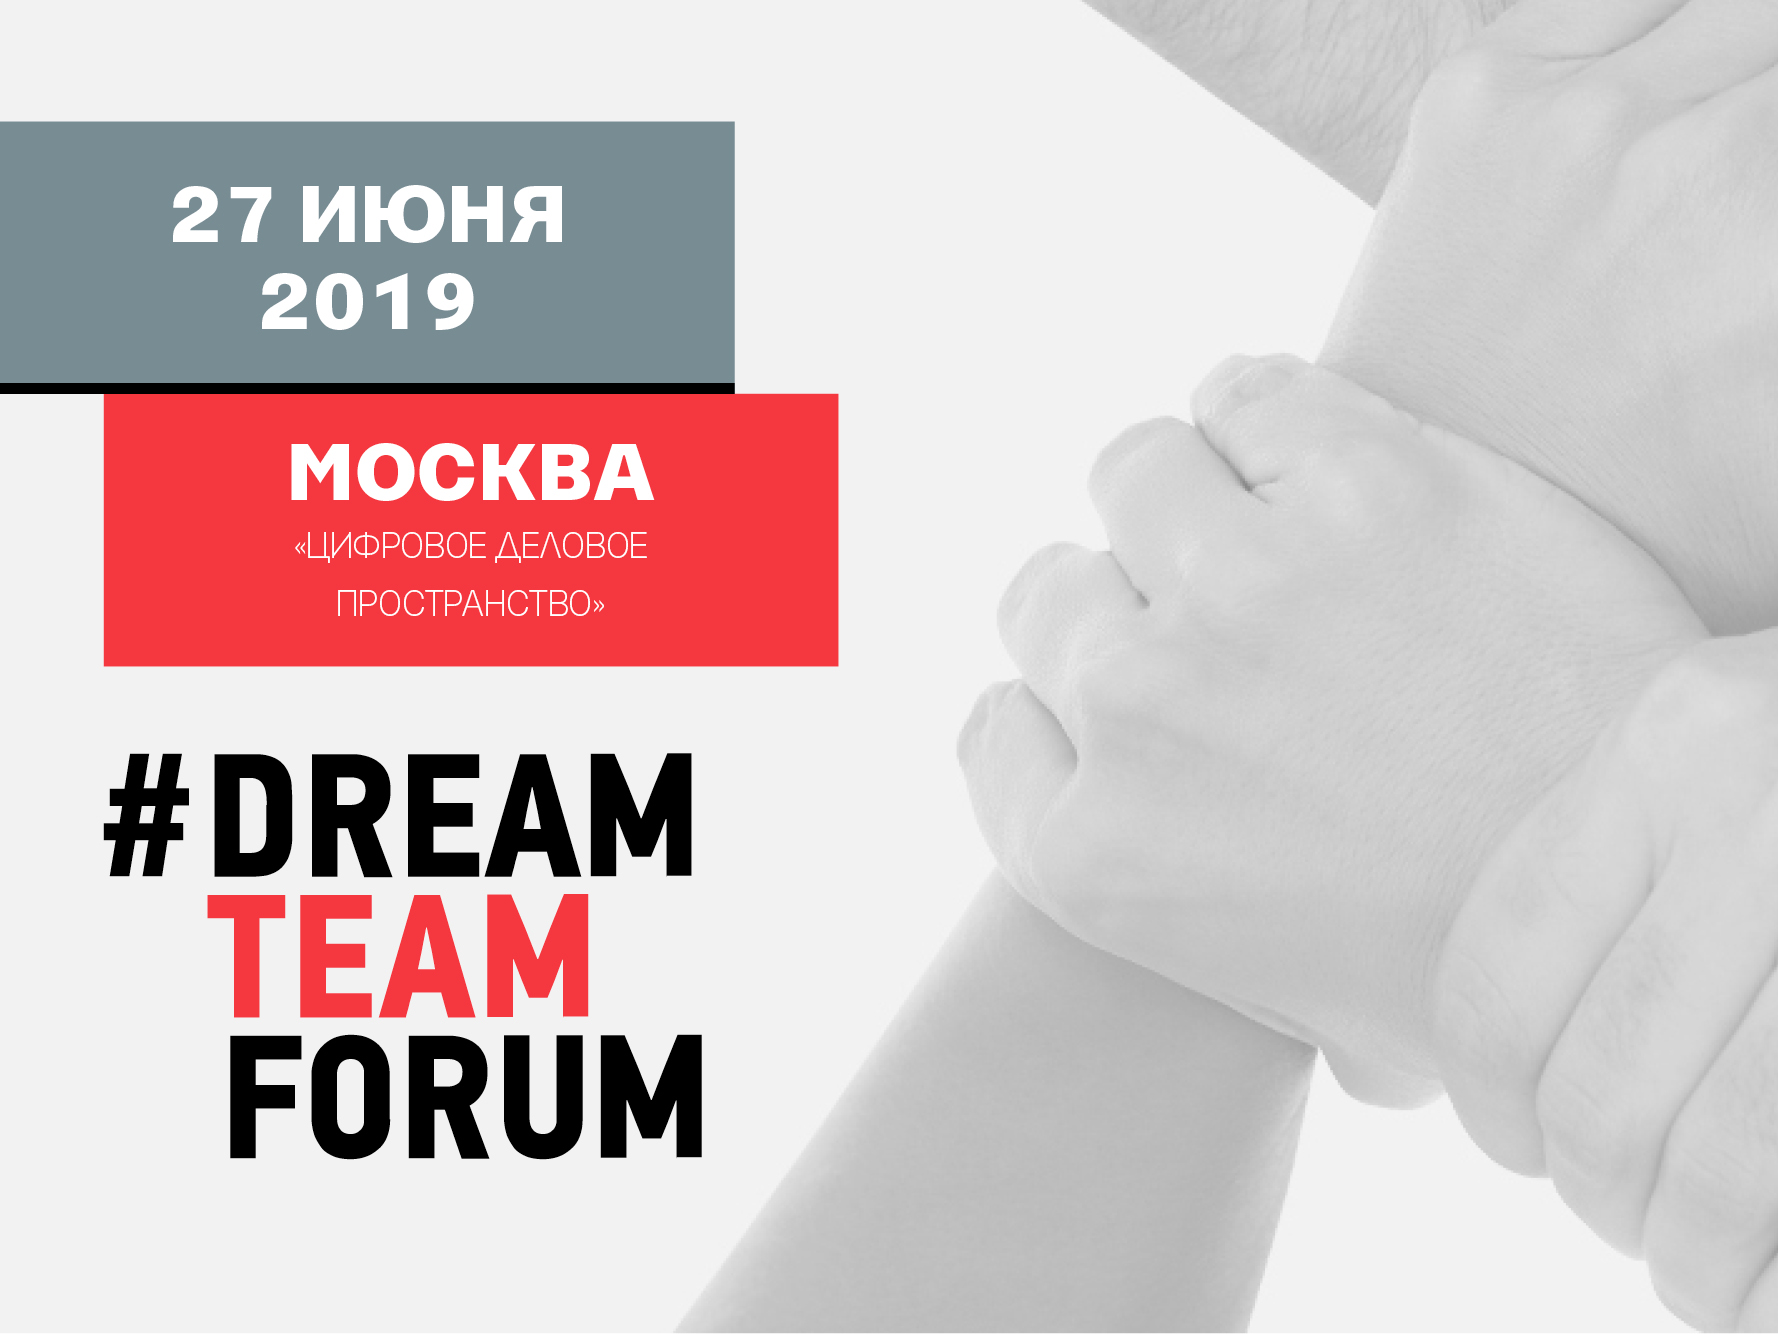 DreamTeam Forum